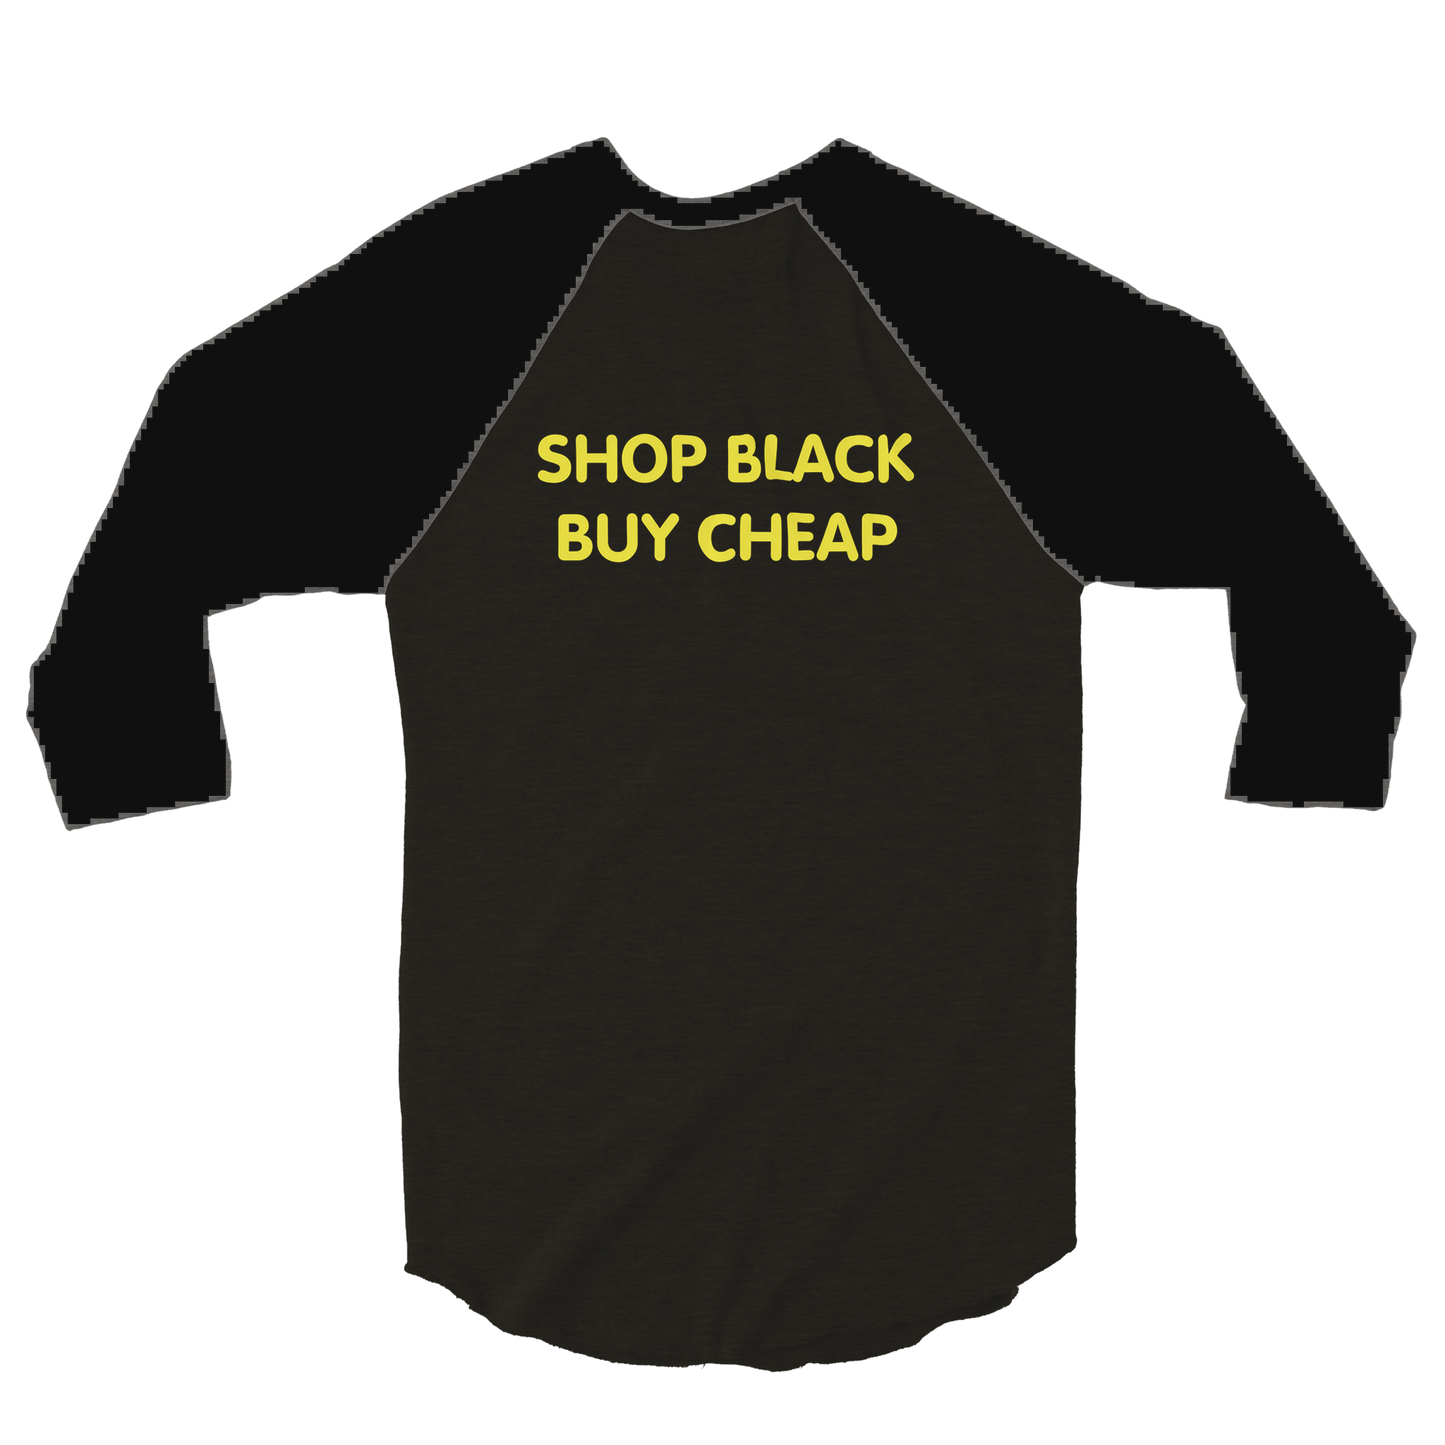 SHOP BLACK BUY CHEAP - Unisex 3/4 sleeve Raglan T-shirt